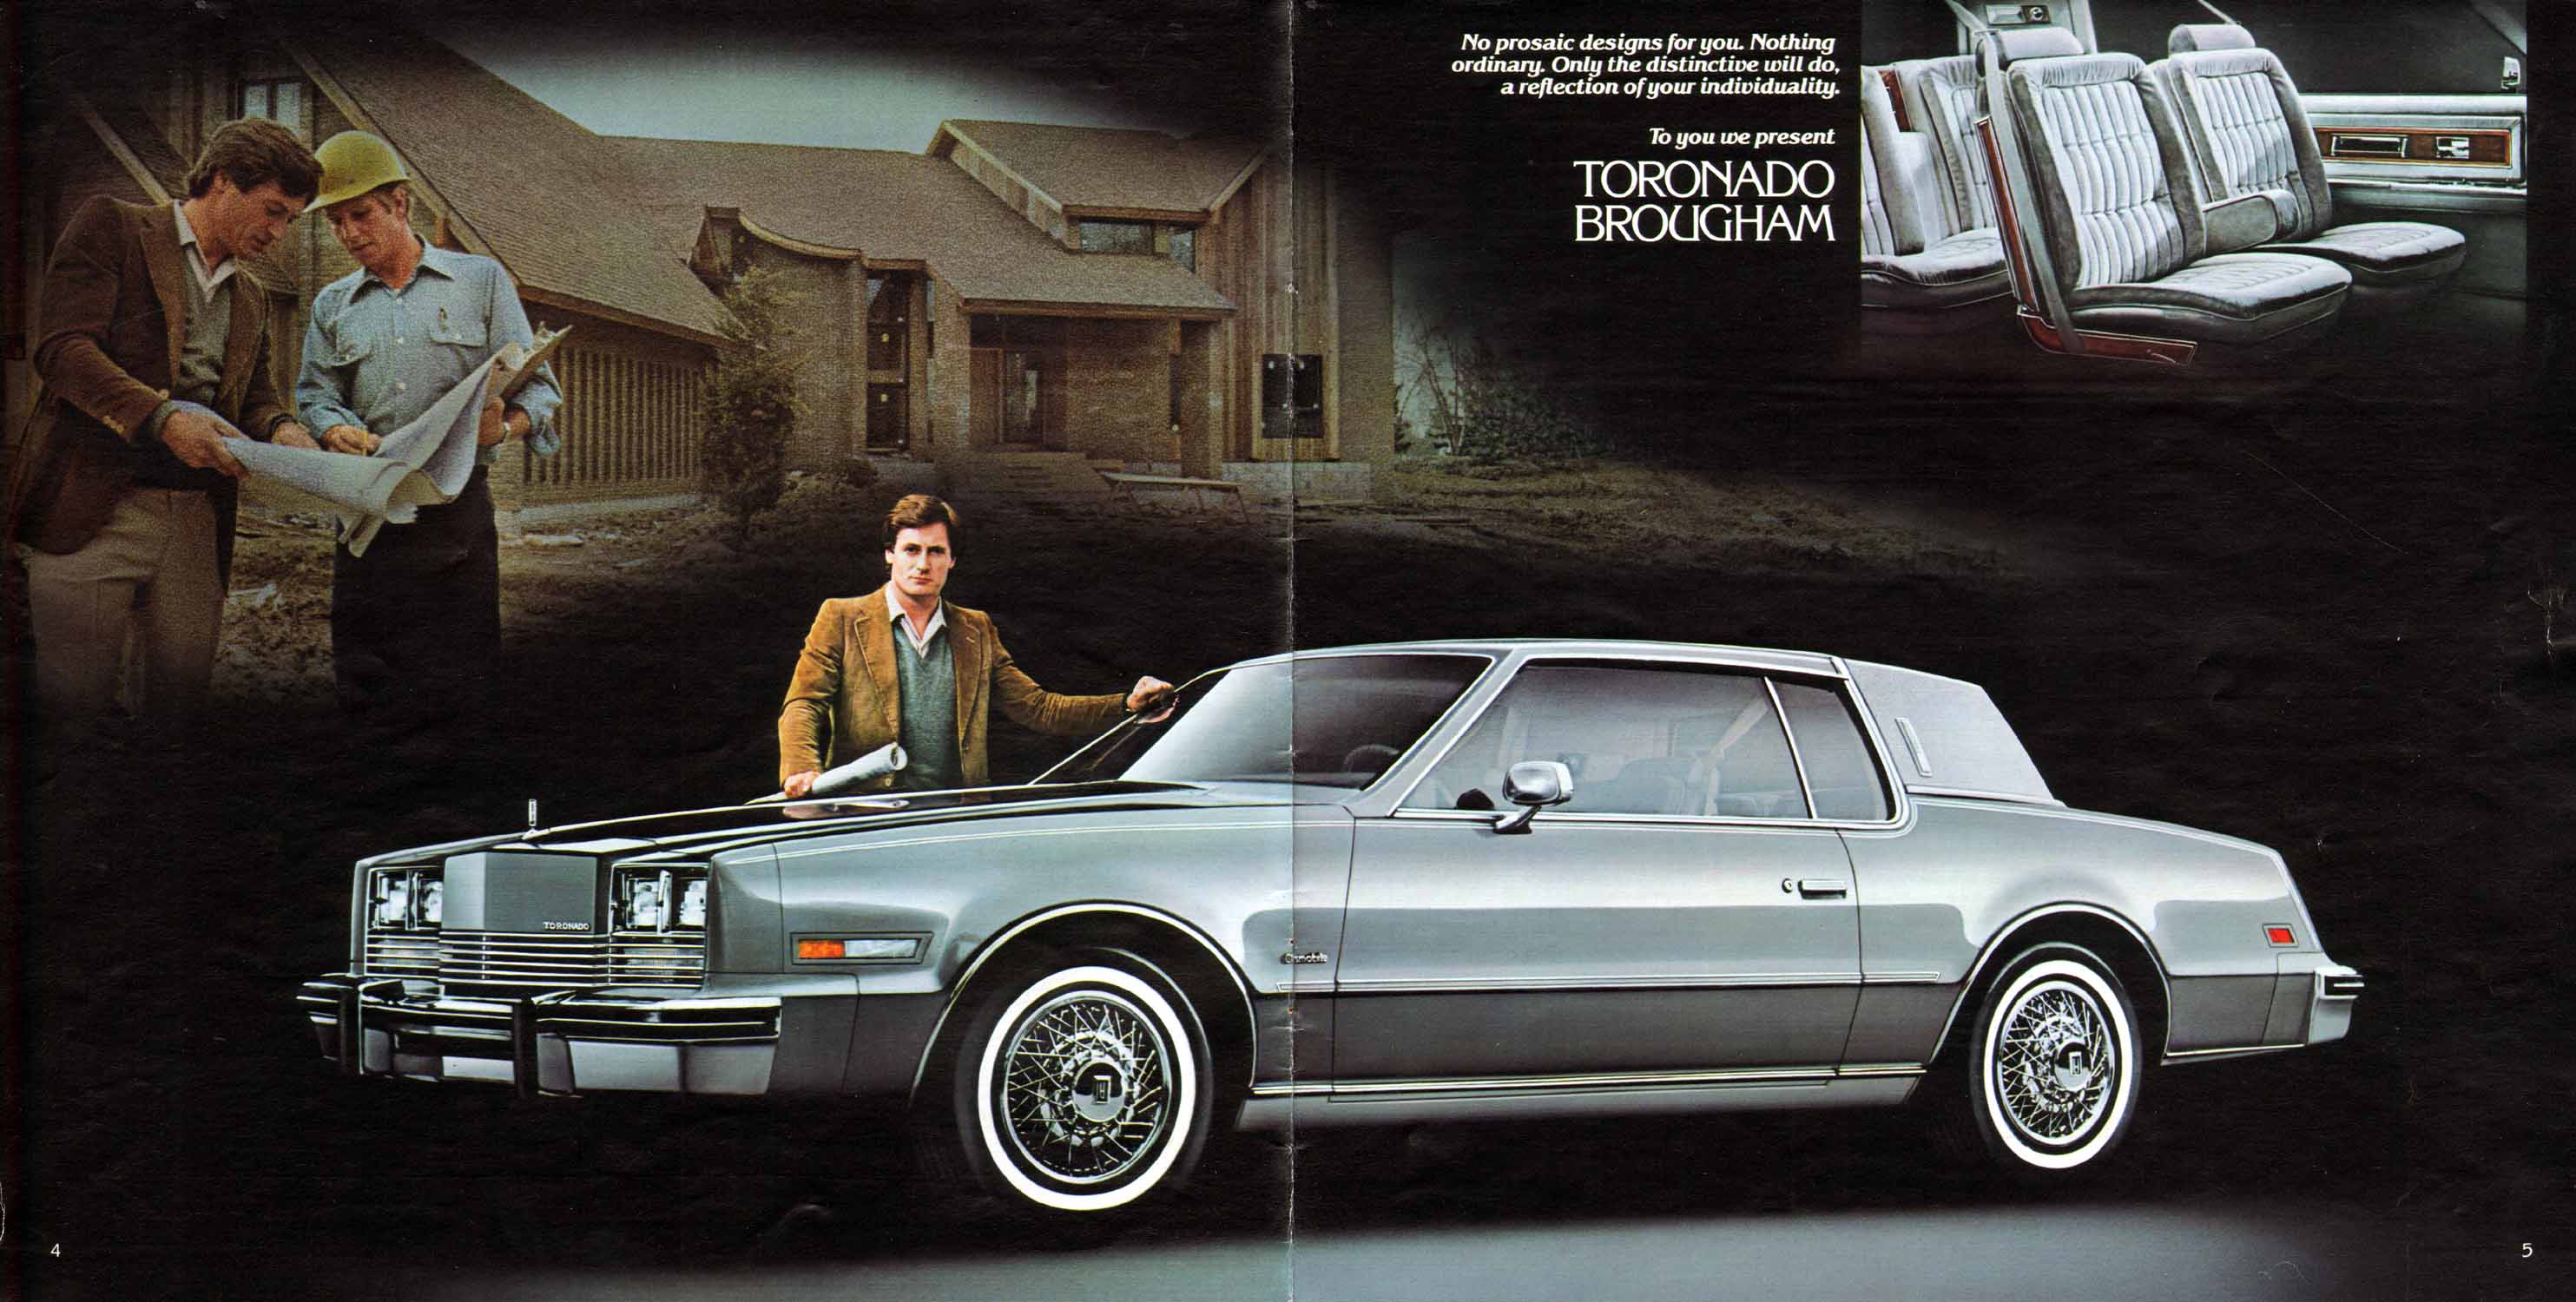 1982_Oldsmobile_Full_Size-04-05